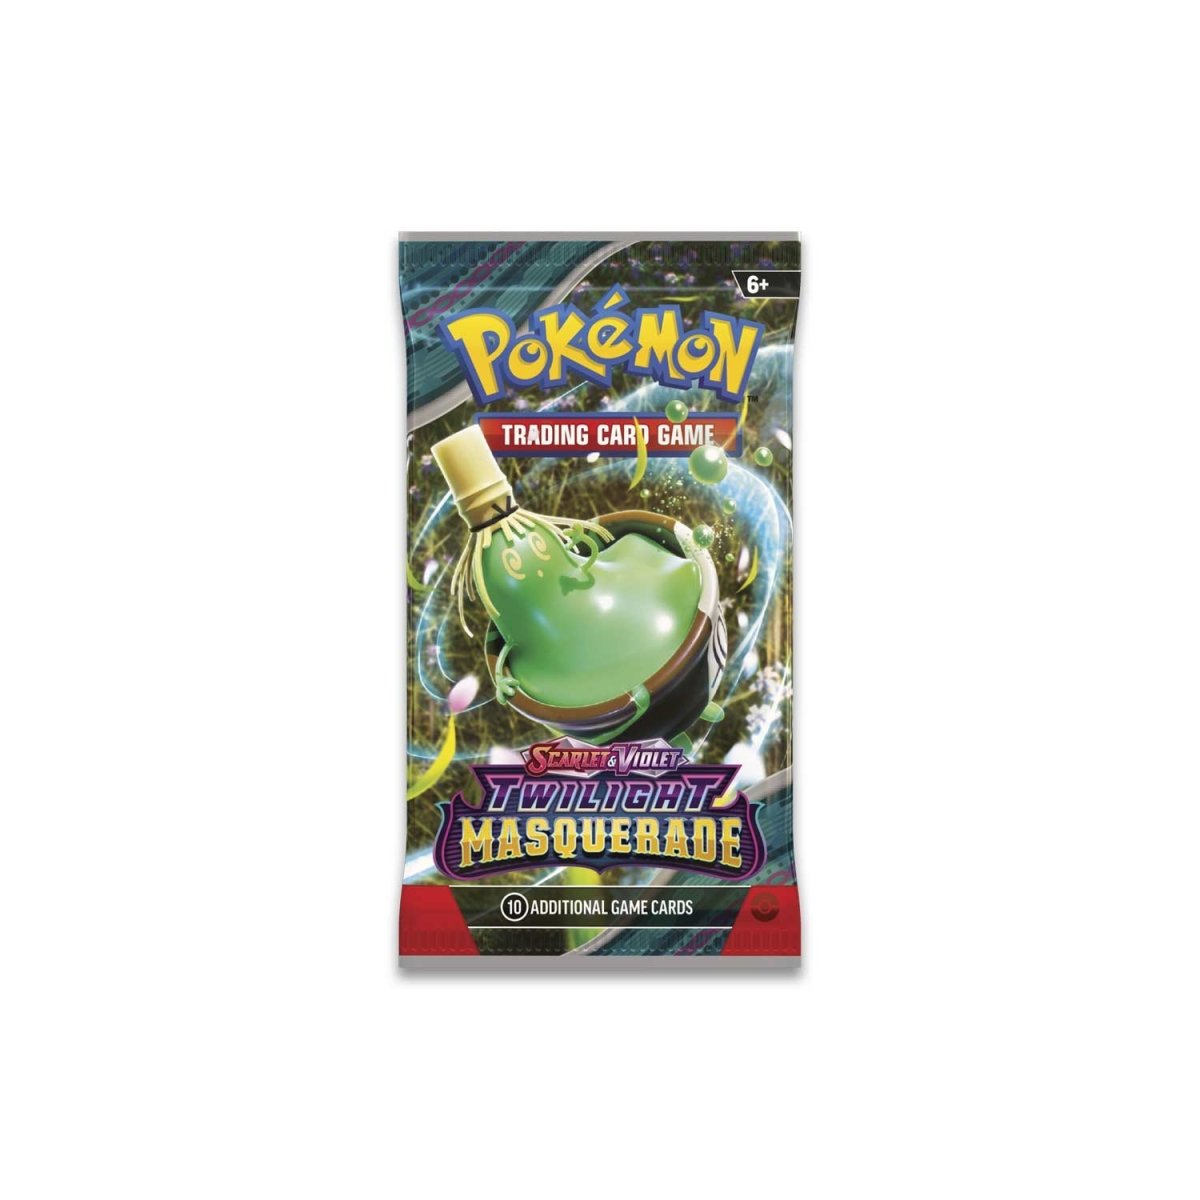 Pokémon Paquet Booster (10 Cartes) - Scarlet & Violet - Twilight Masquerade